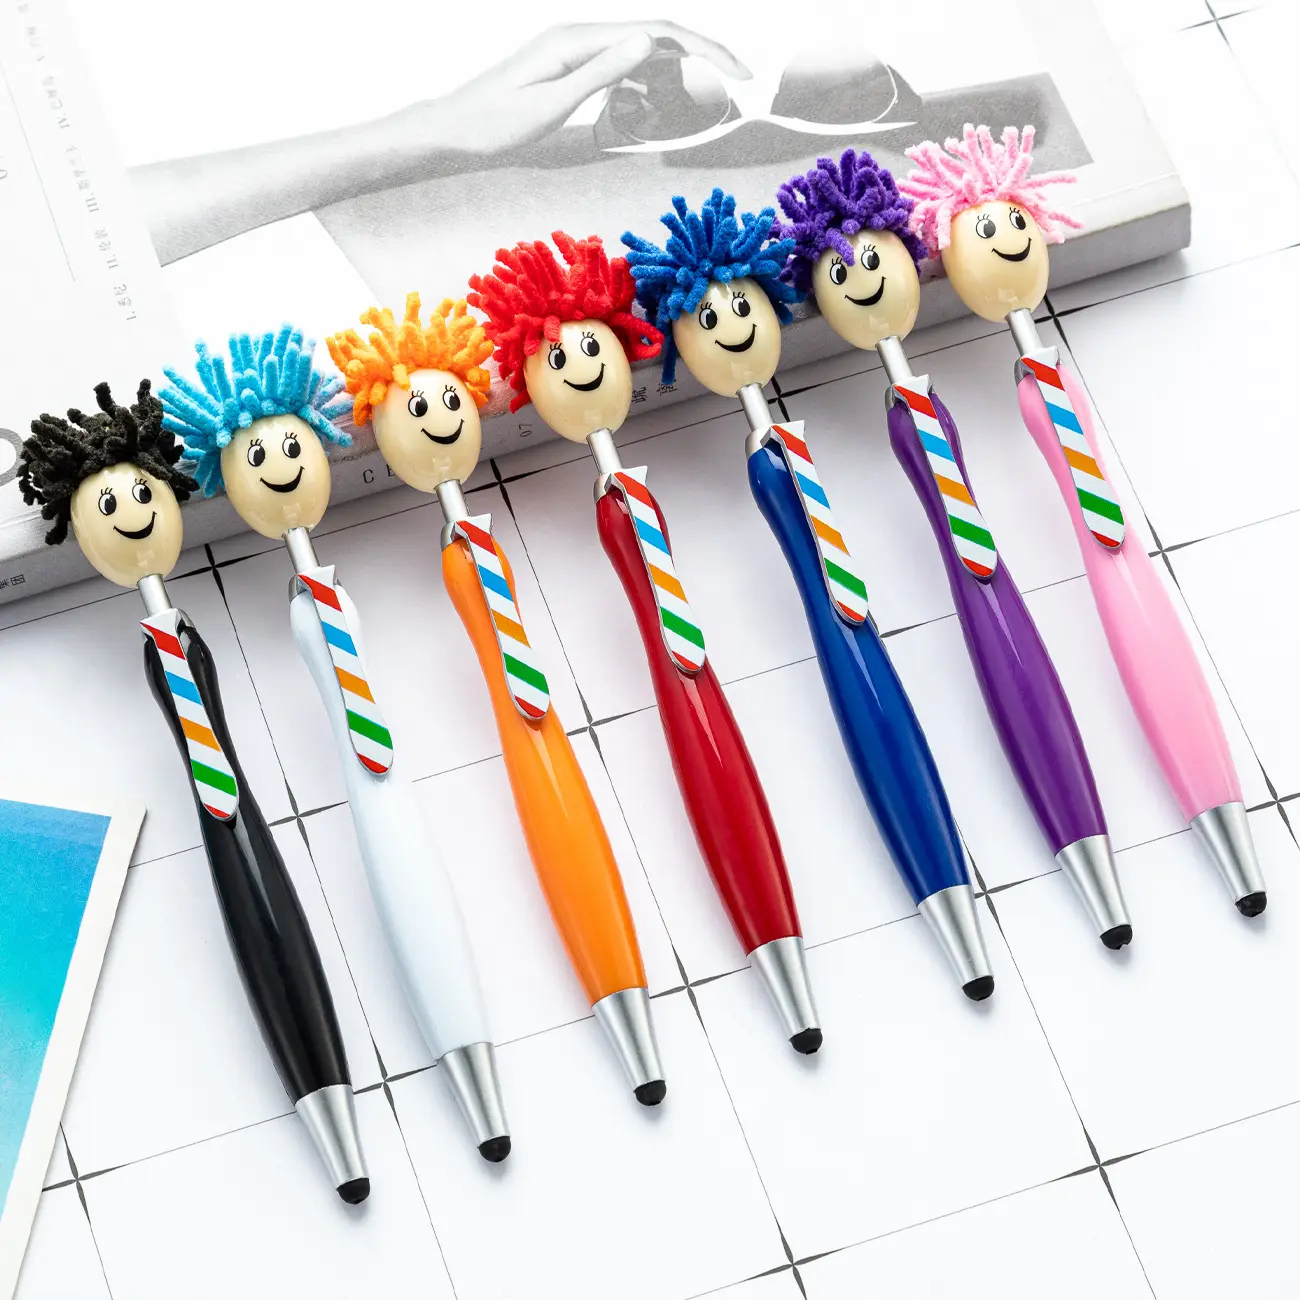 Plush doll head plastic pen cartoon hair printable logo ballpoint pen smiling face expression three in one touch screen pen